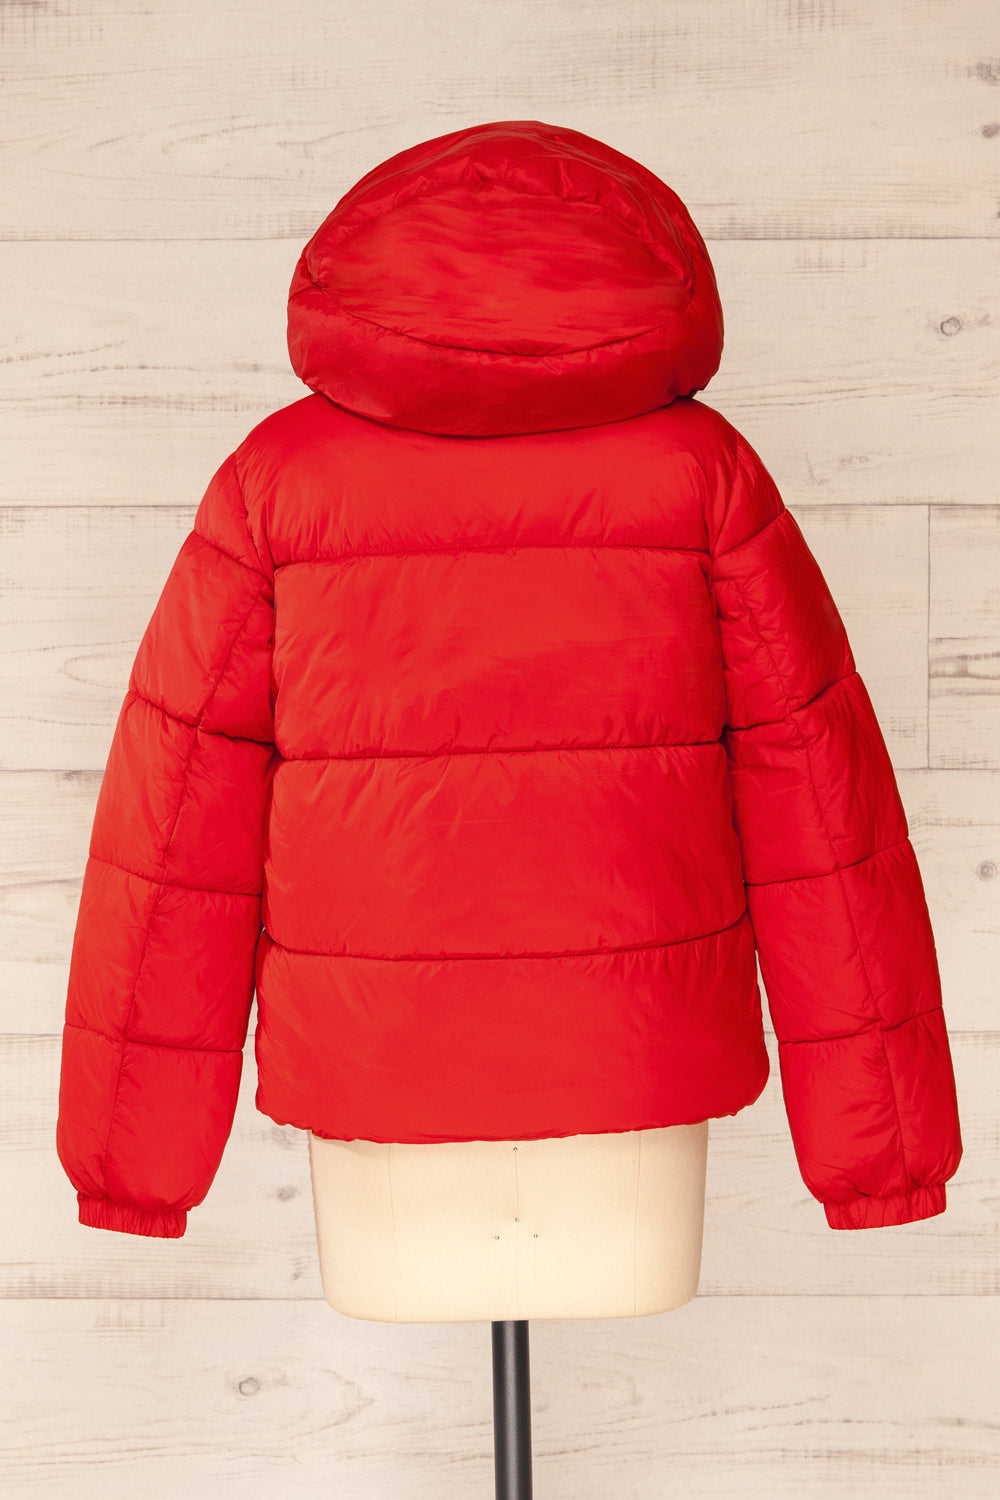 Rasdale Red Short Puffer Coat | La petite garçonne back view hood